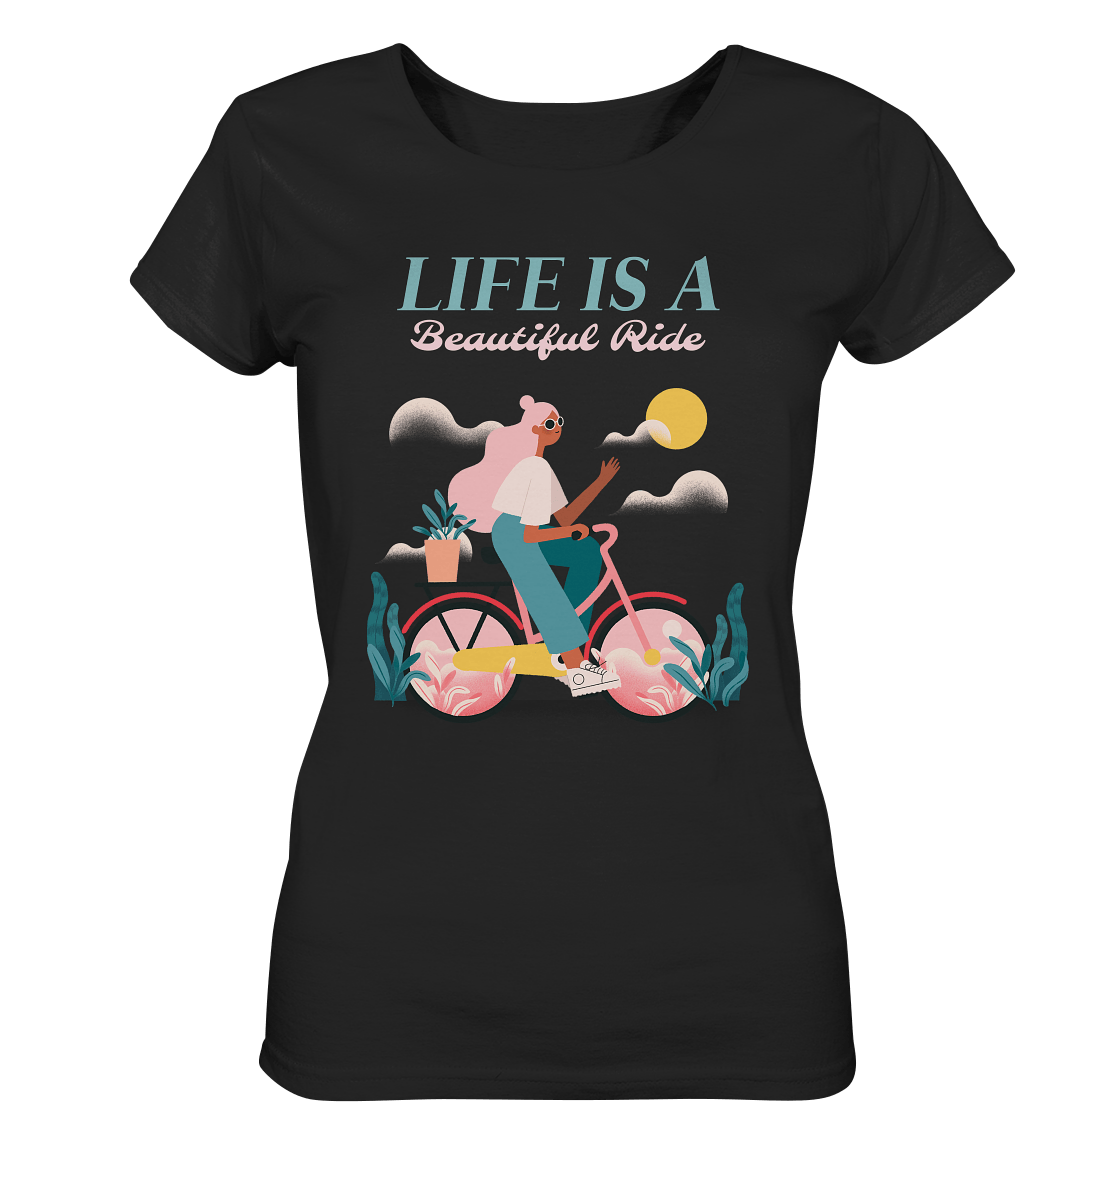 Damen T-Shirt "Life is a beautiful ride" Flat Illustration